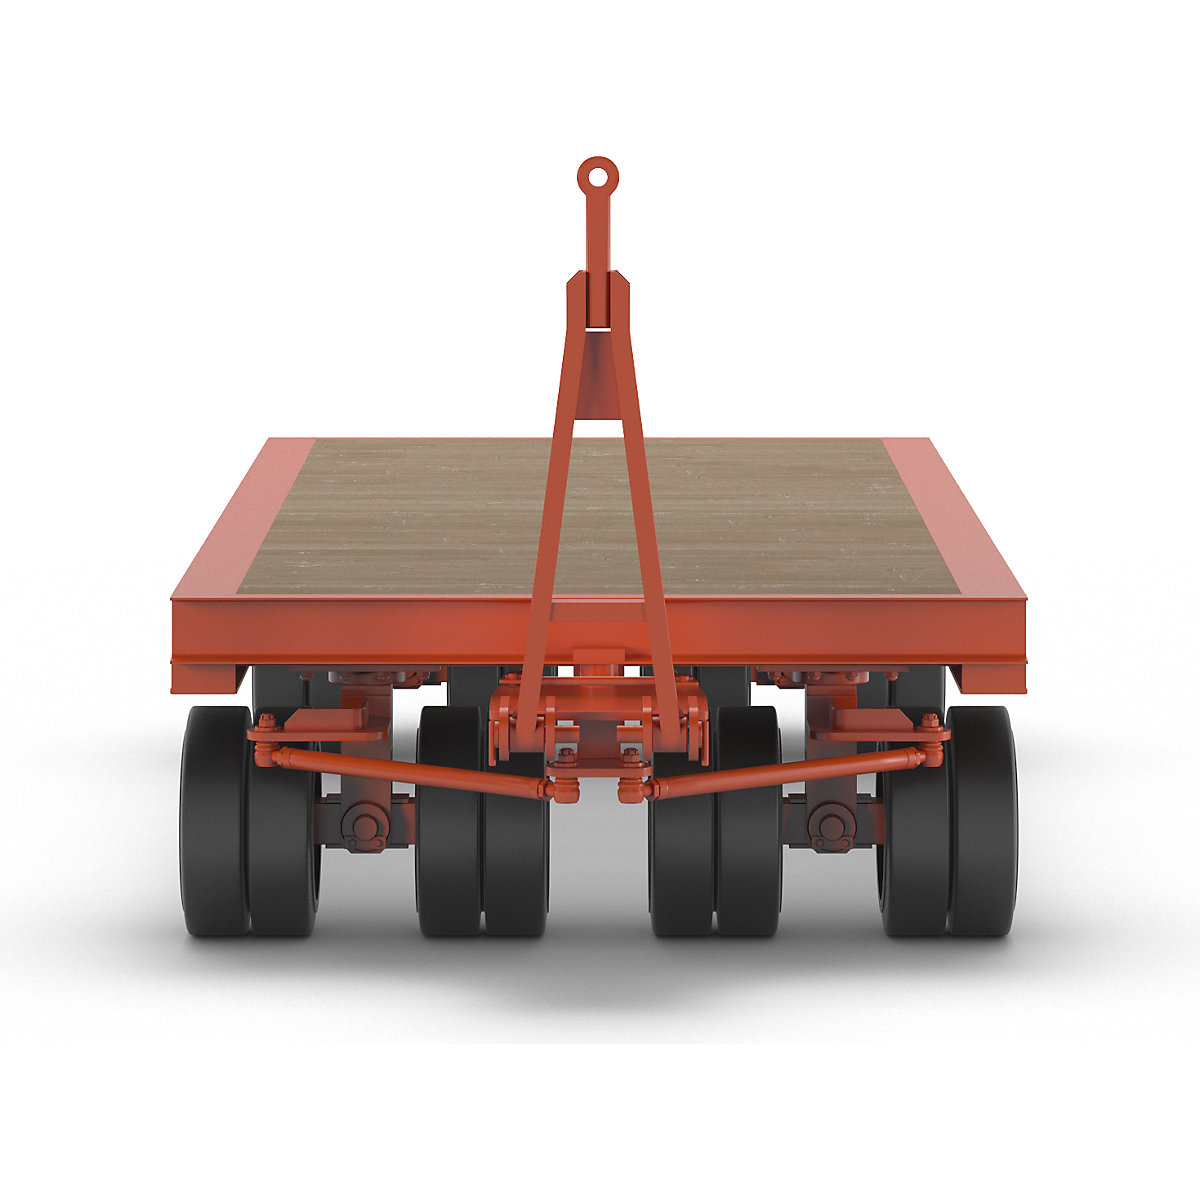 Heavy goods trailer (Product illustration 5)-4